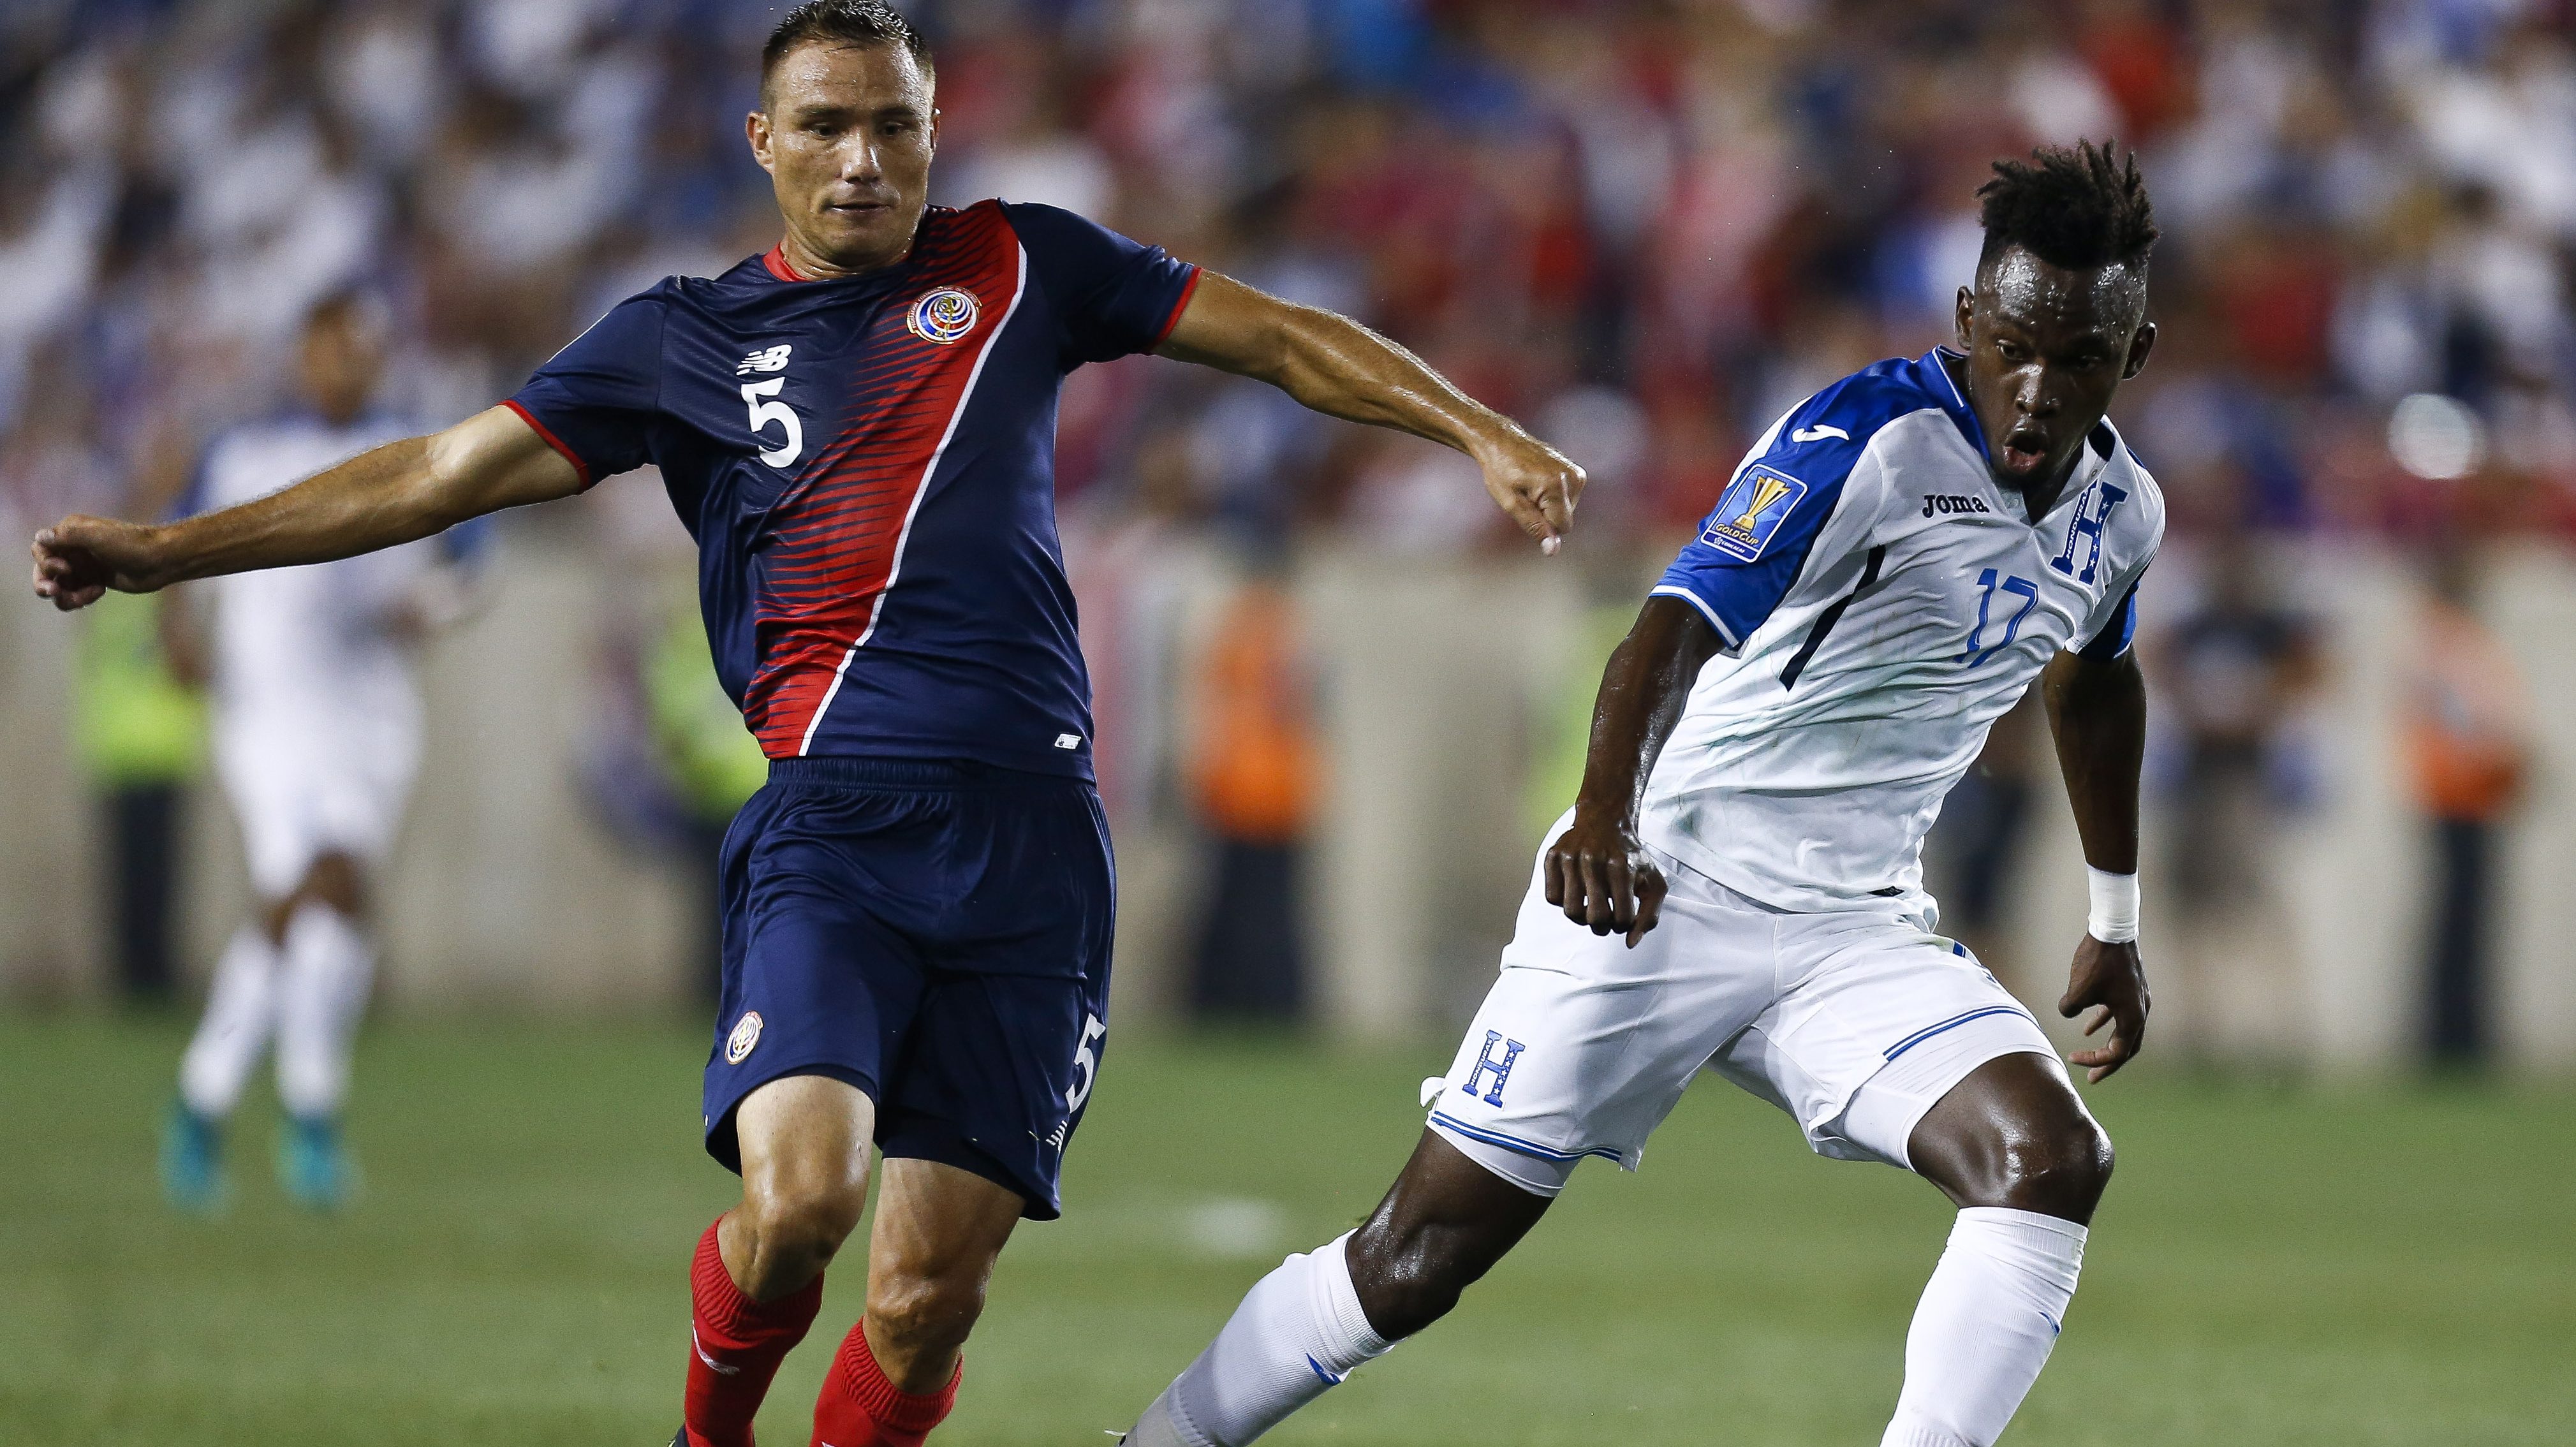 Costa Rica vs. Honduras Live Stream How to Watch Online